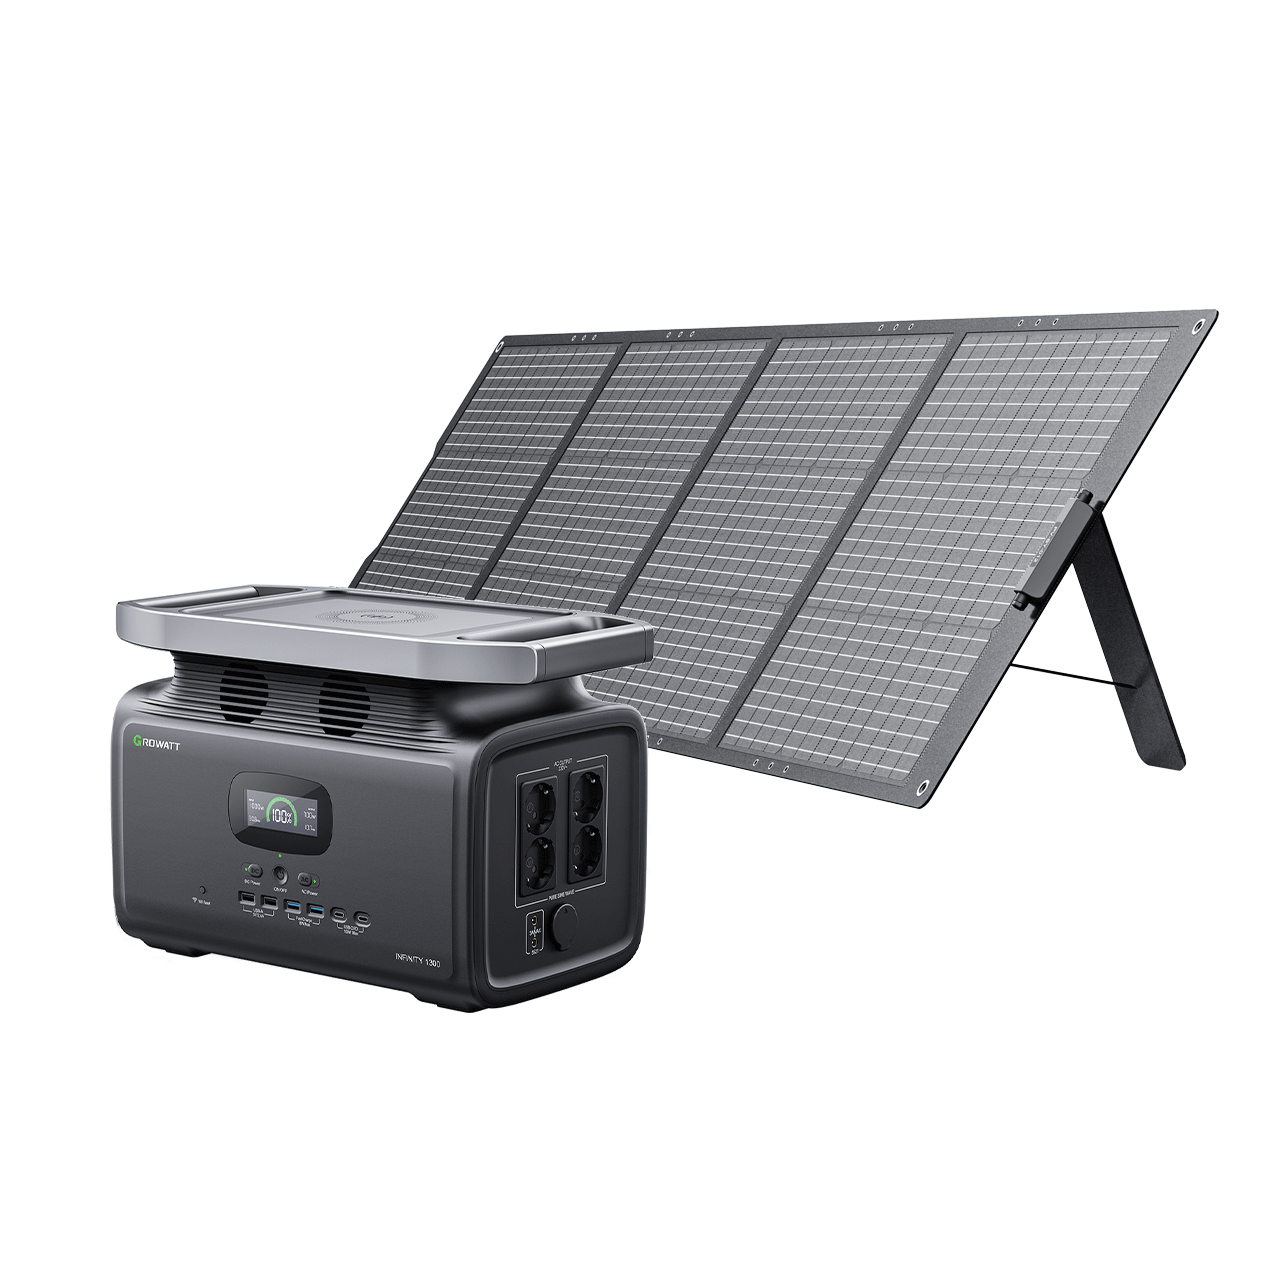 Growatt Solargenerotar LiFePo4 - Infinity 1300 mit 200W Solarpanel